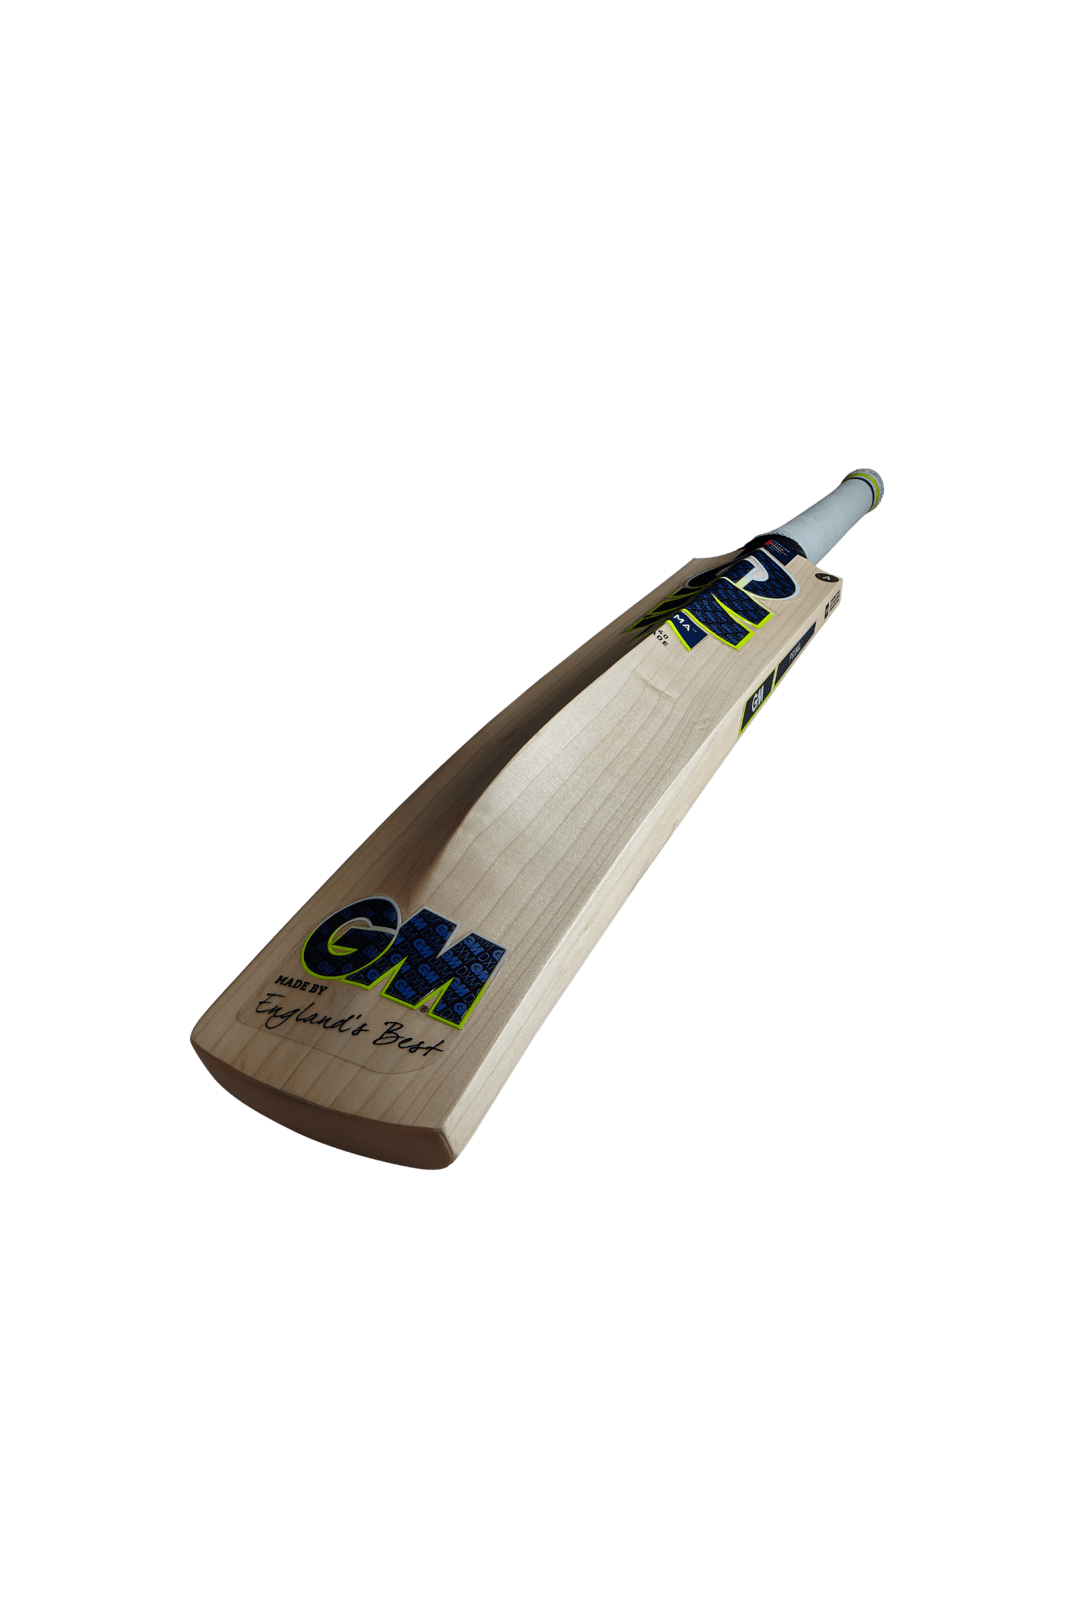 Gunn & Moore Cricket Bats GM Adult Cricket Bat - Prima Dxm 606 Ttnow SH